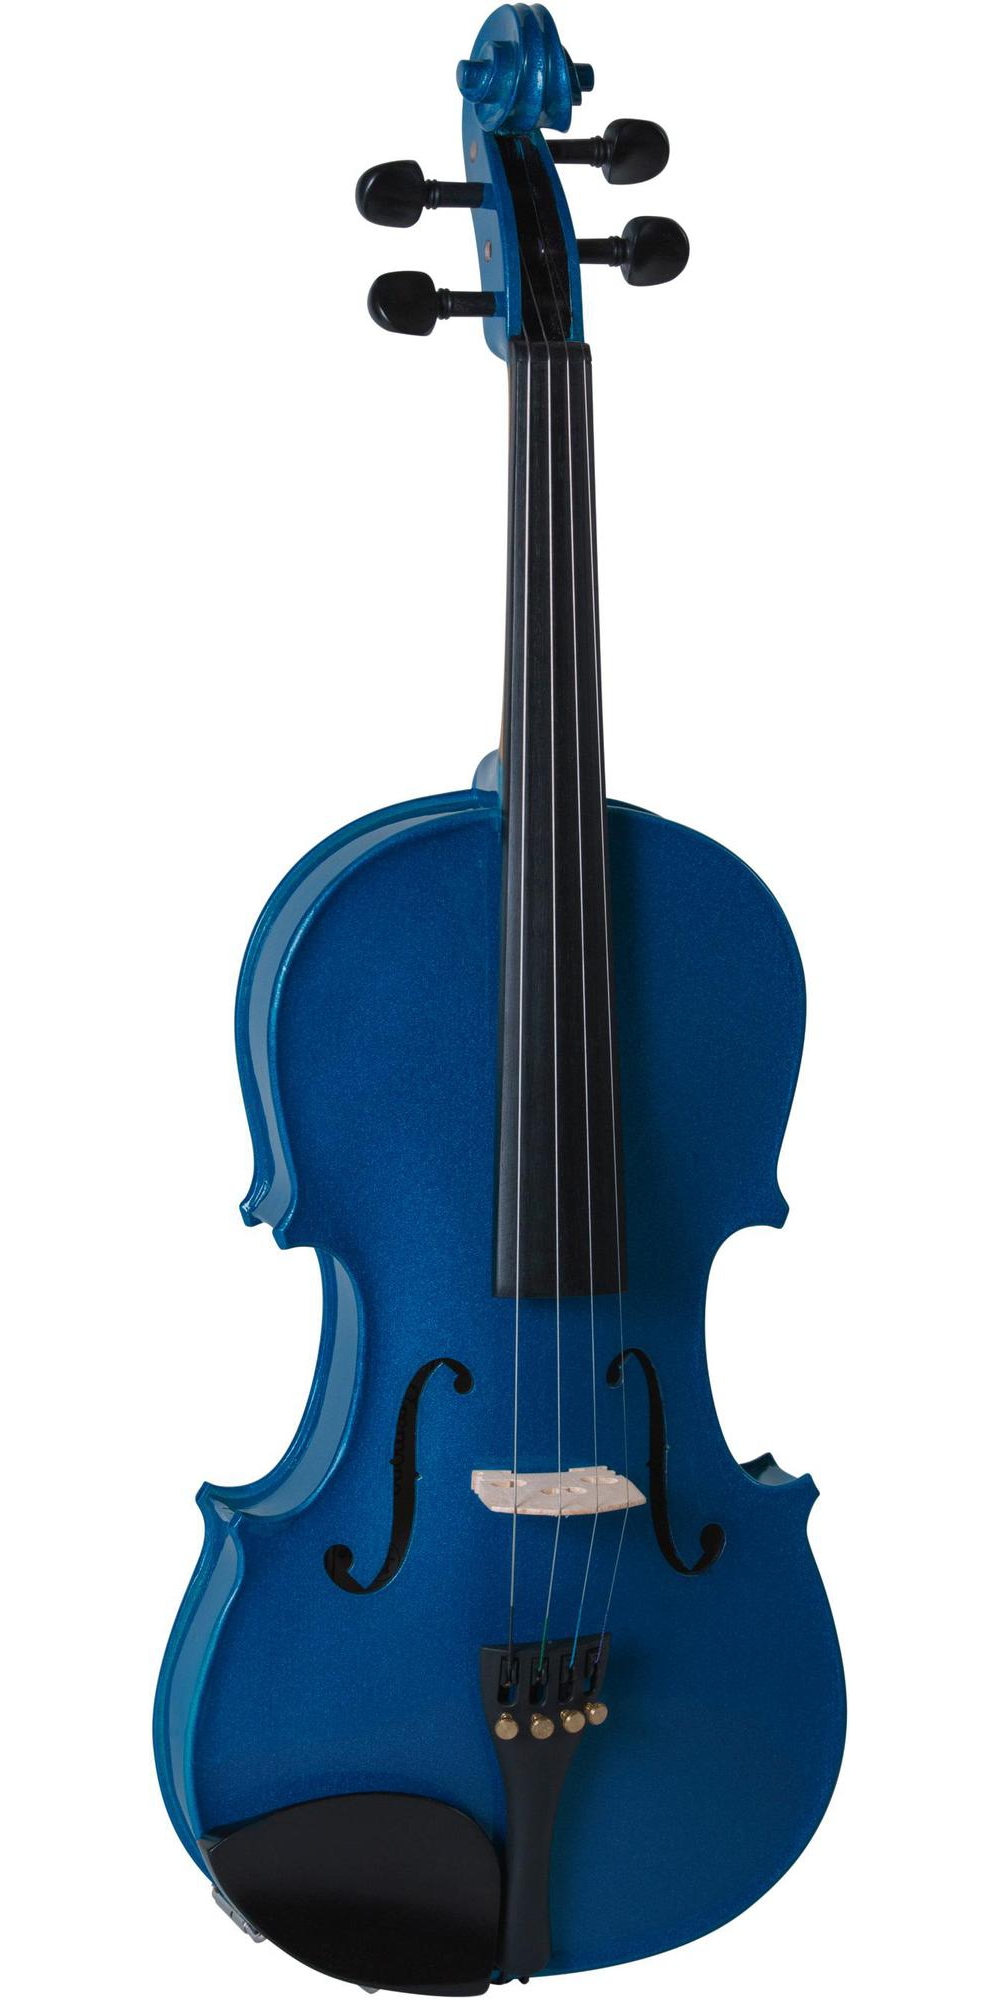 Cremona SV-130BU Series Sparkling Blue Violin Outfit 4/4 Size